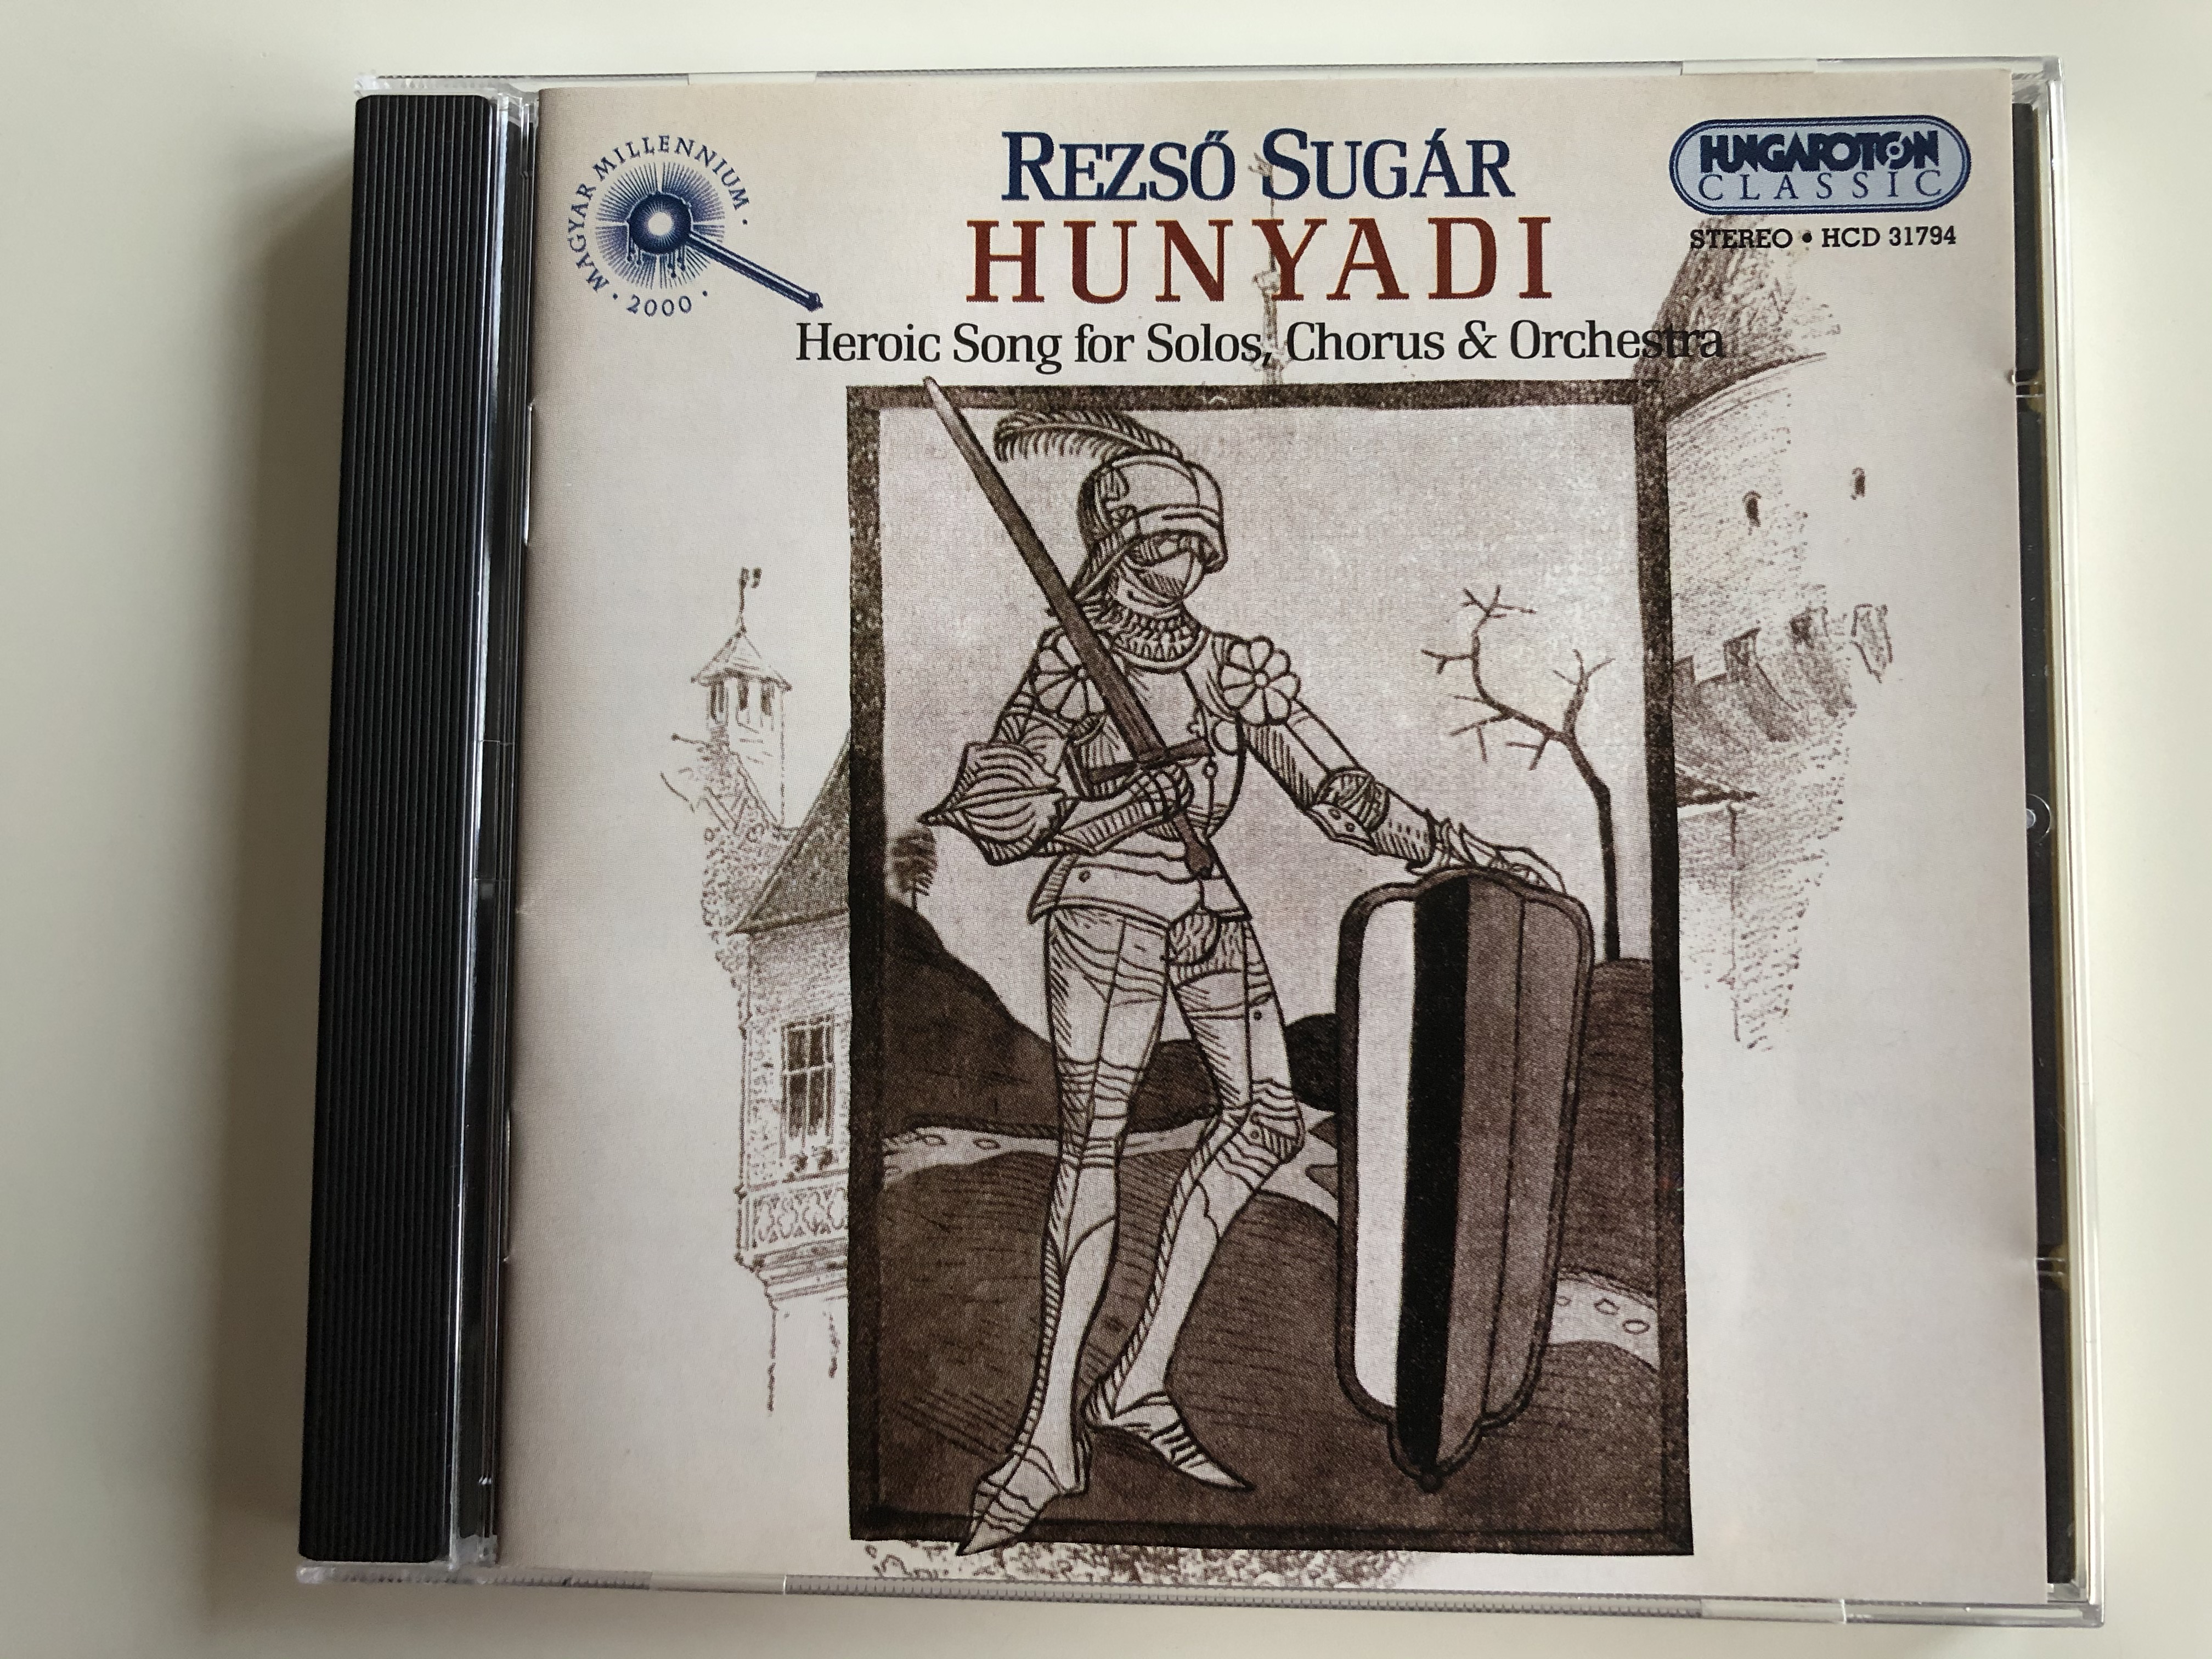 rezso-sugar-hunyadi-heroic-song-for-solos-chorus-orchestra-hungaroton-classic-audio-cd-1964-stereo-hcd-31794-1-.jpg